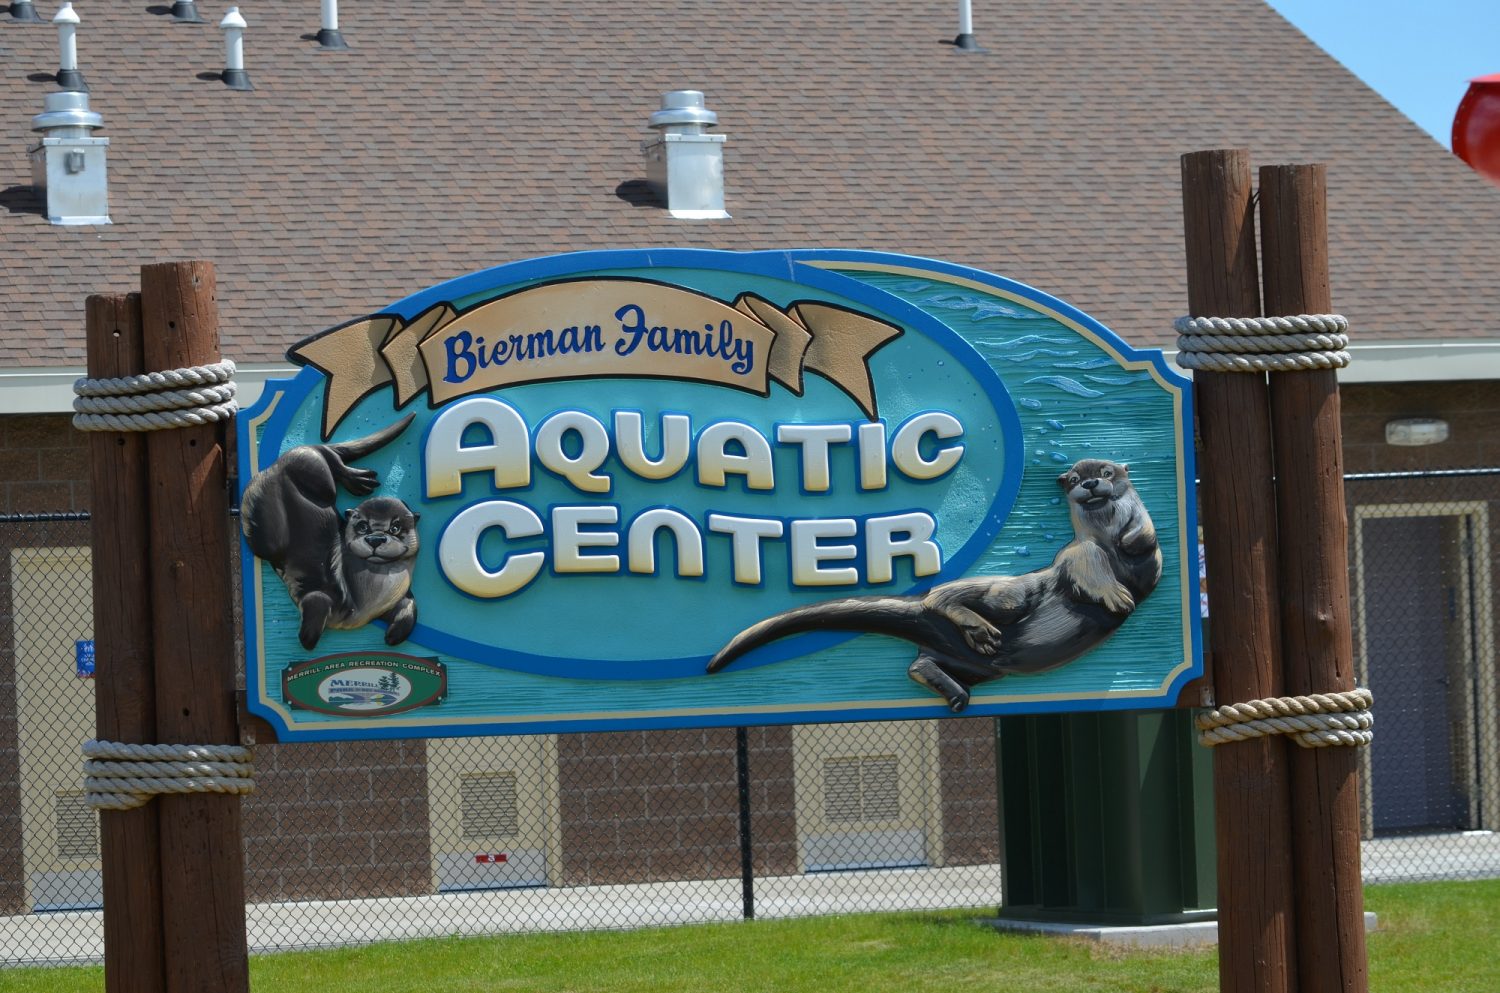 Aquatic Center kicks off 2017 season